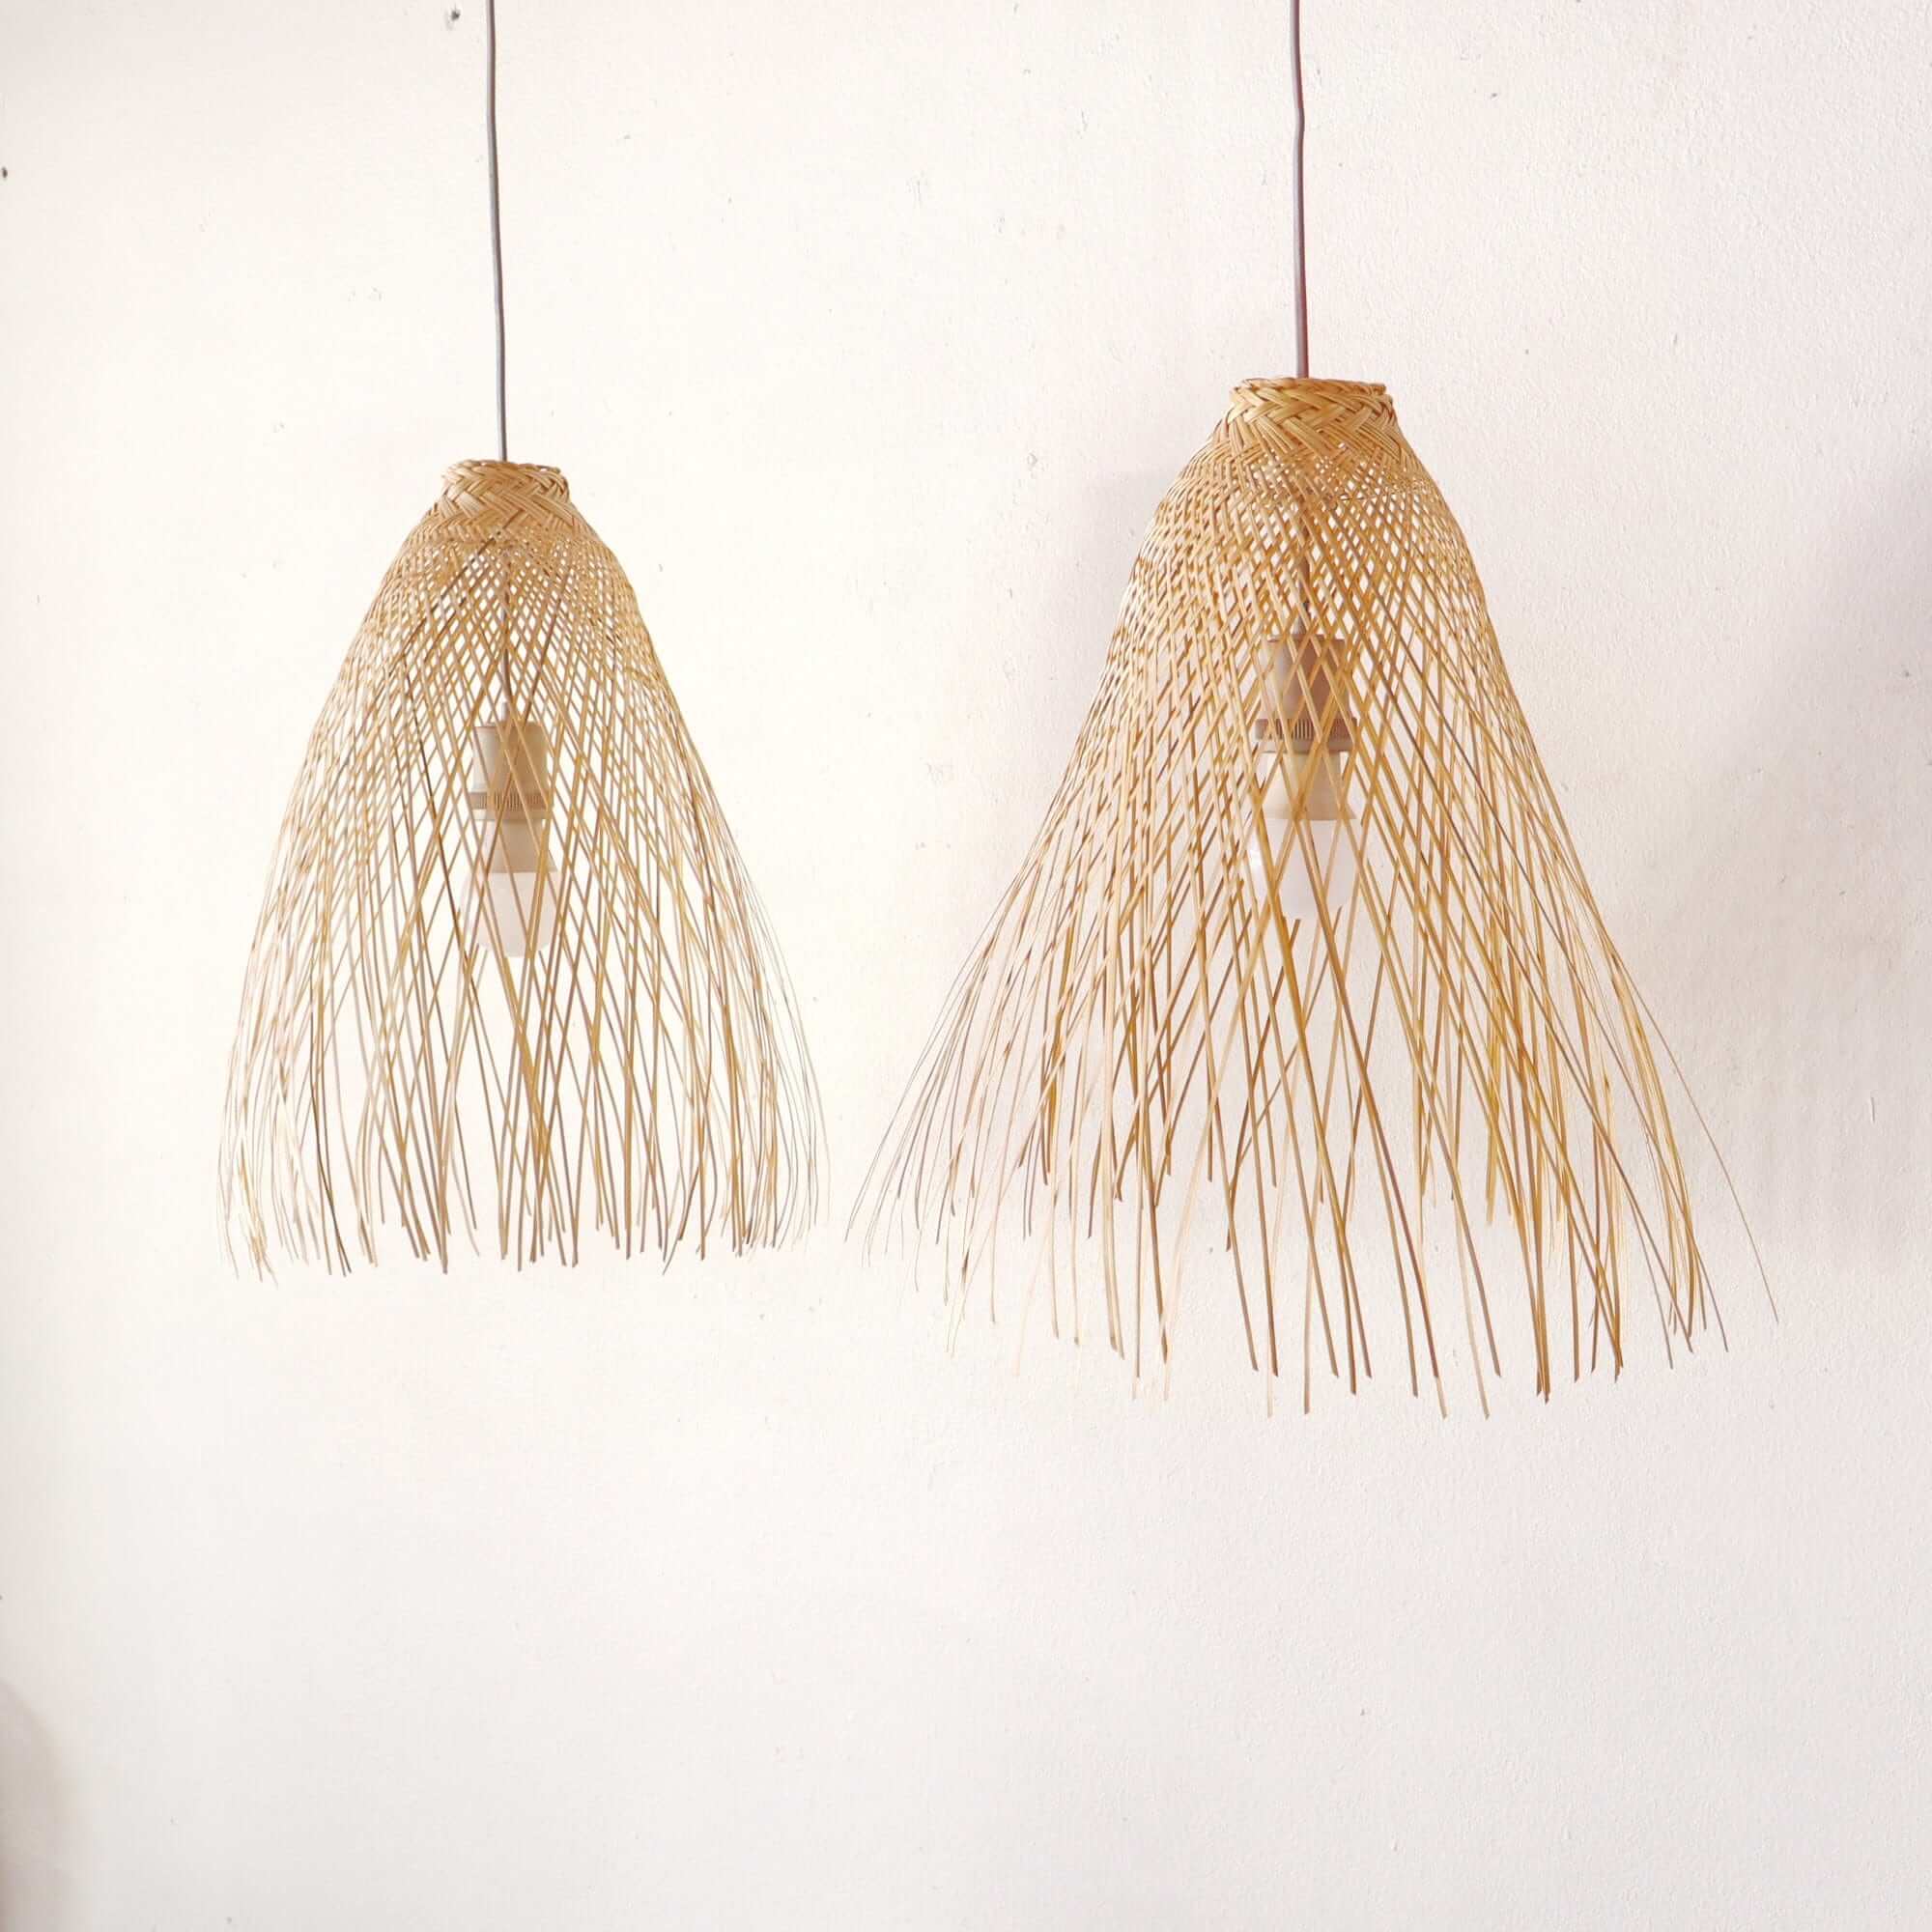 MEY TI NEE - Bamboo Pendant Light